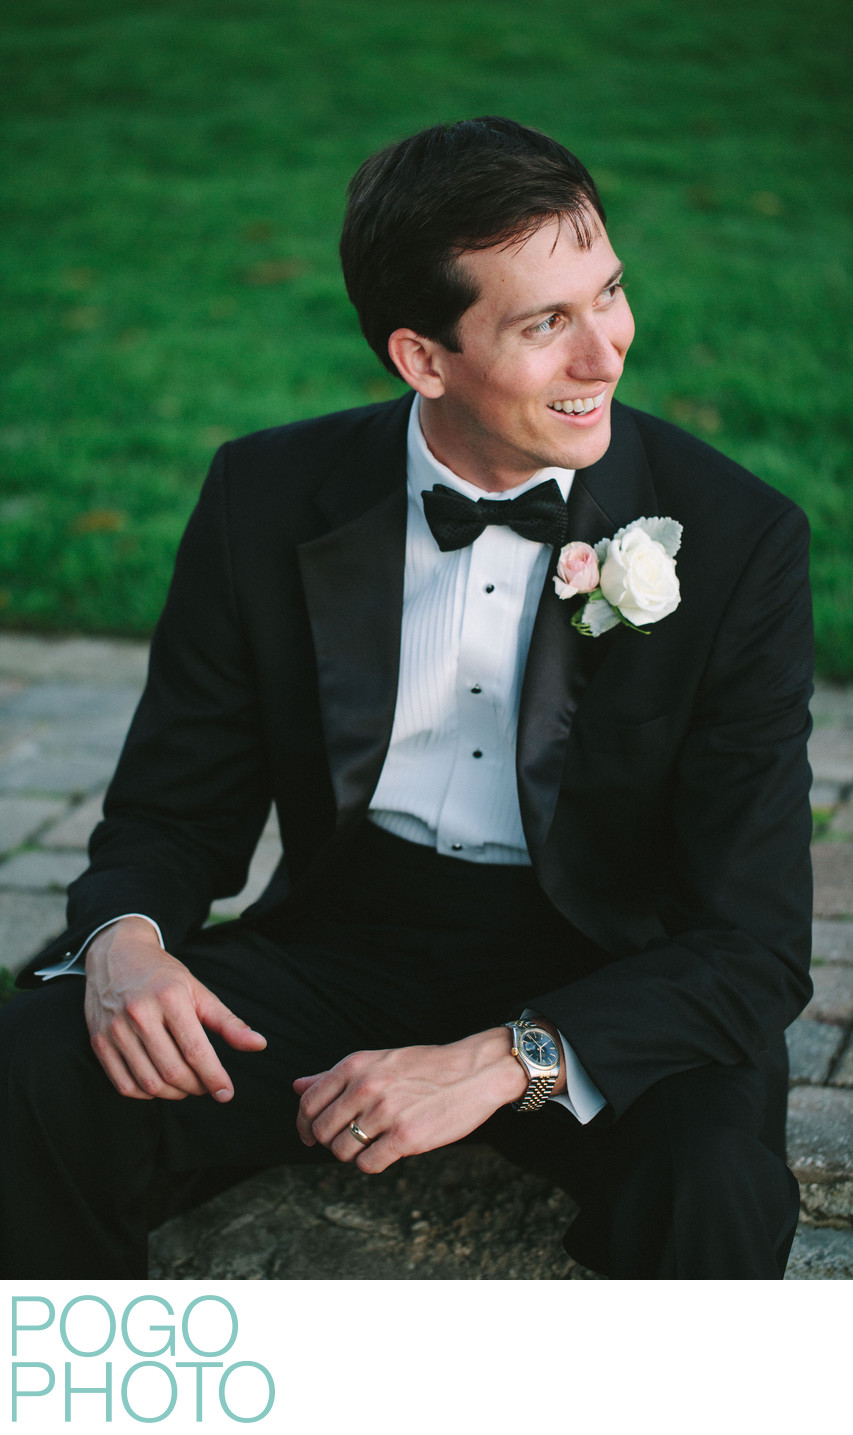 Vermont Groom in Relaxed Portrait Wearing Tuxedo